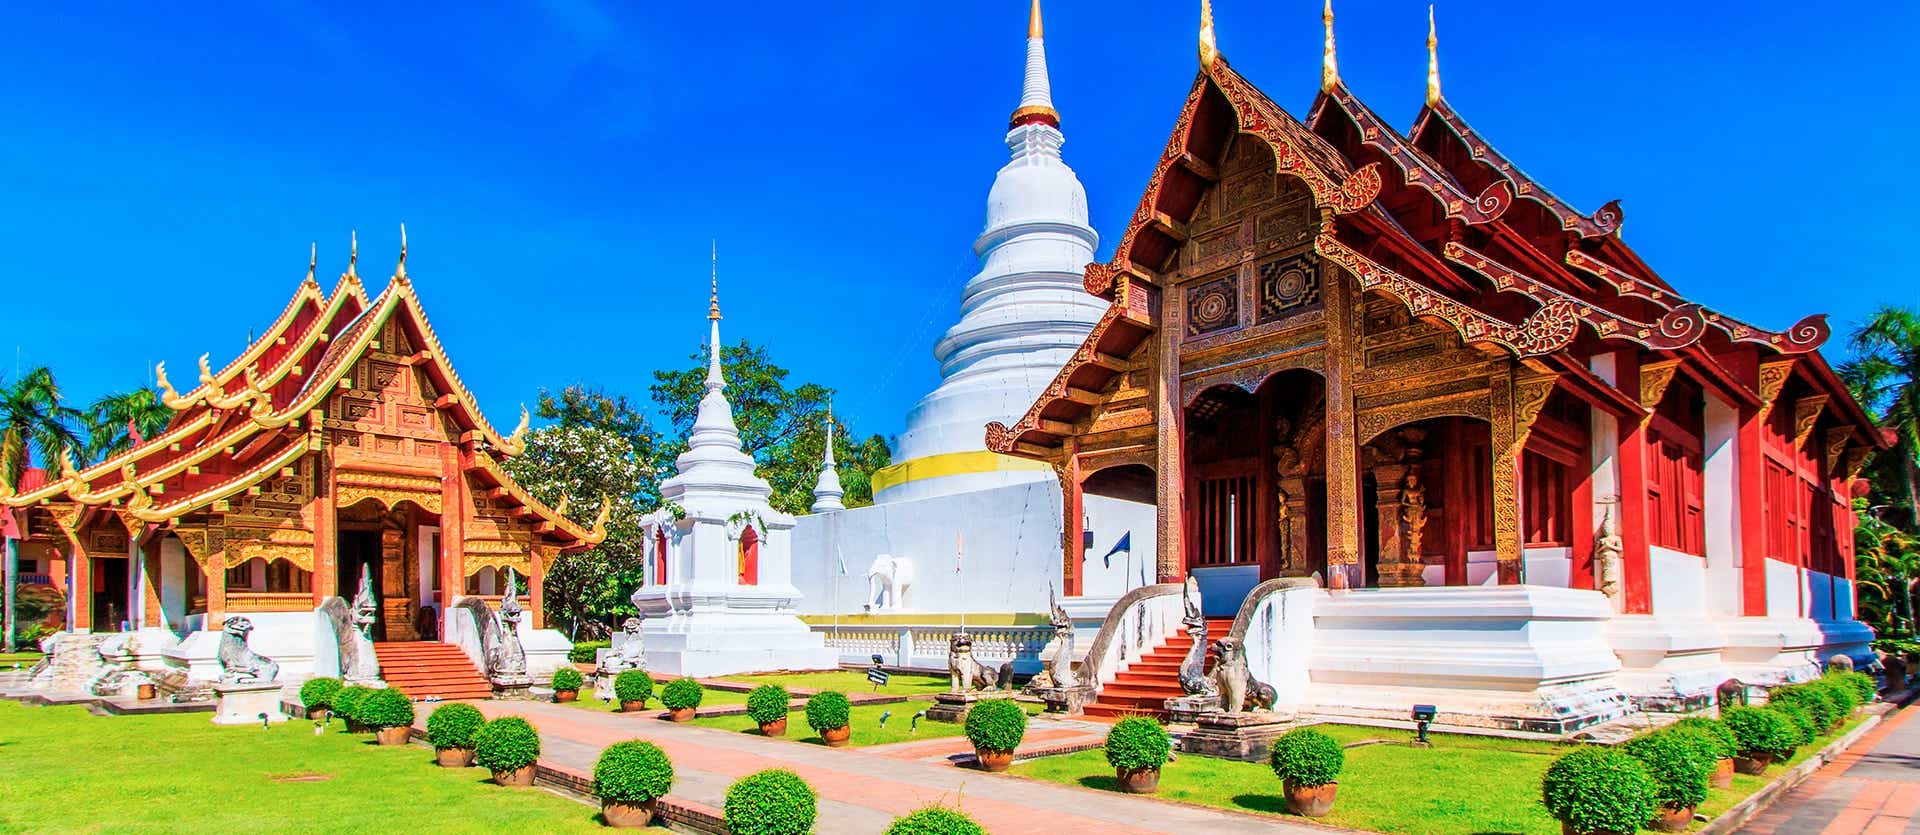 Wat Phra Singh Temple <span class="iconos separador"></span> Chiang Mai